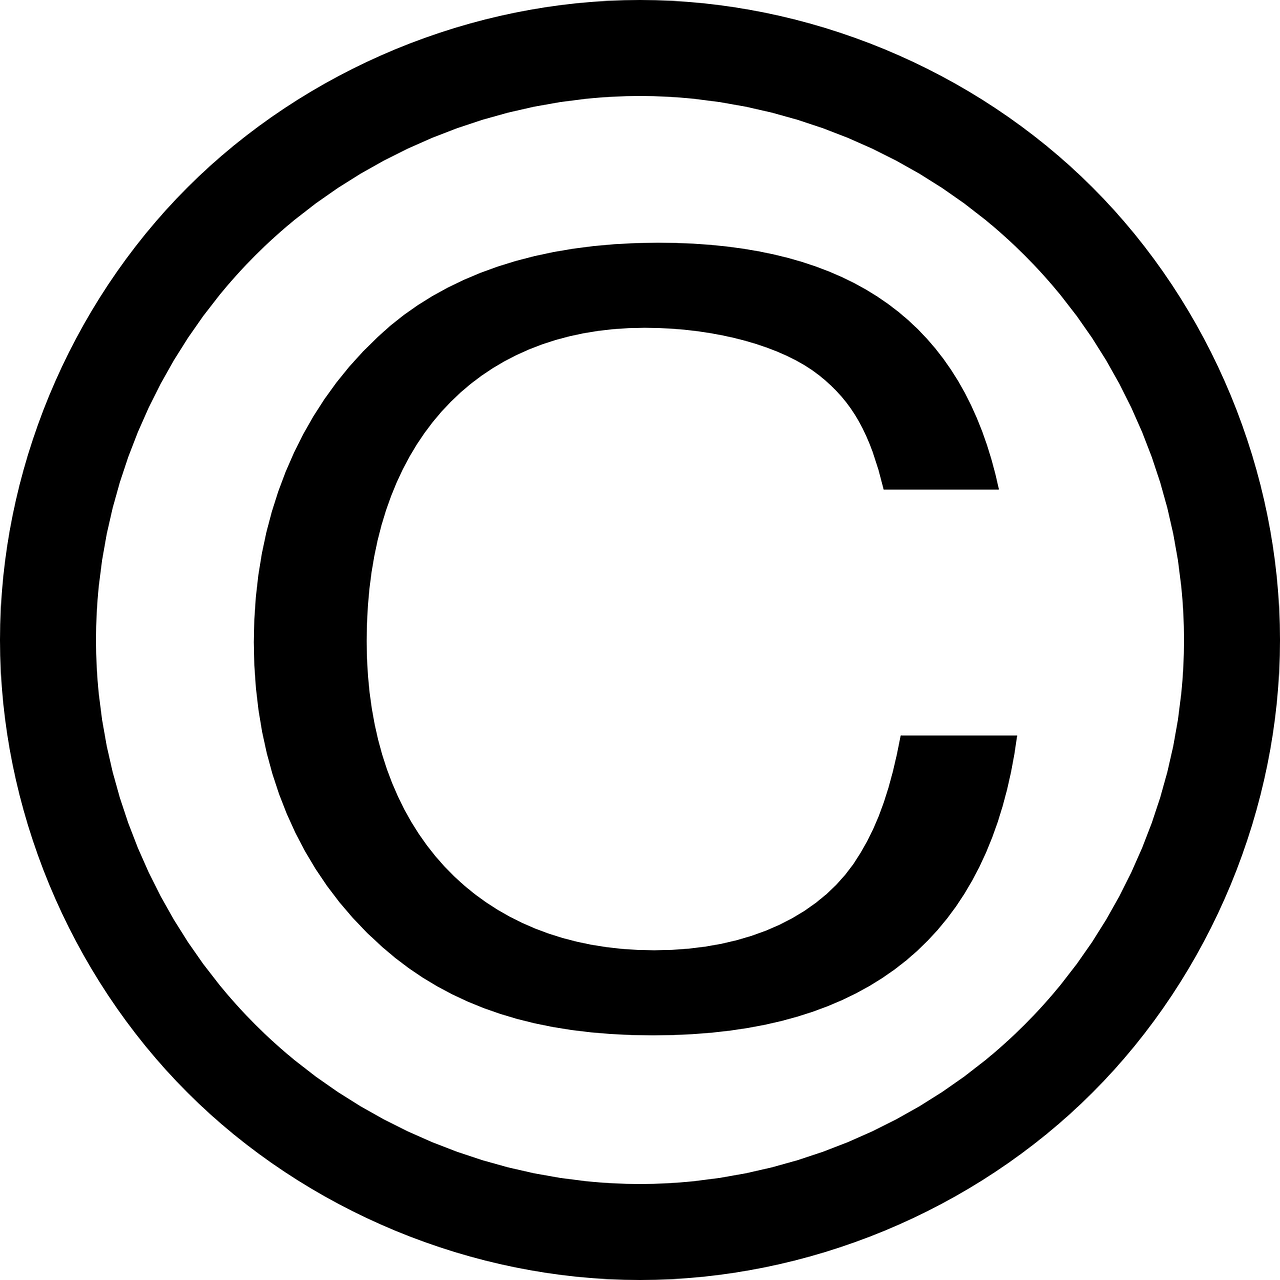 copyright symbol sign free photo